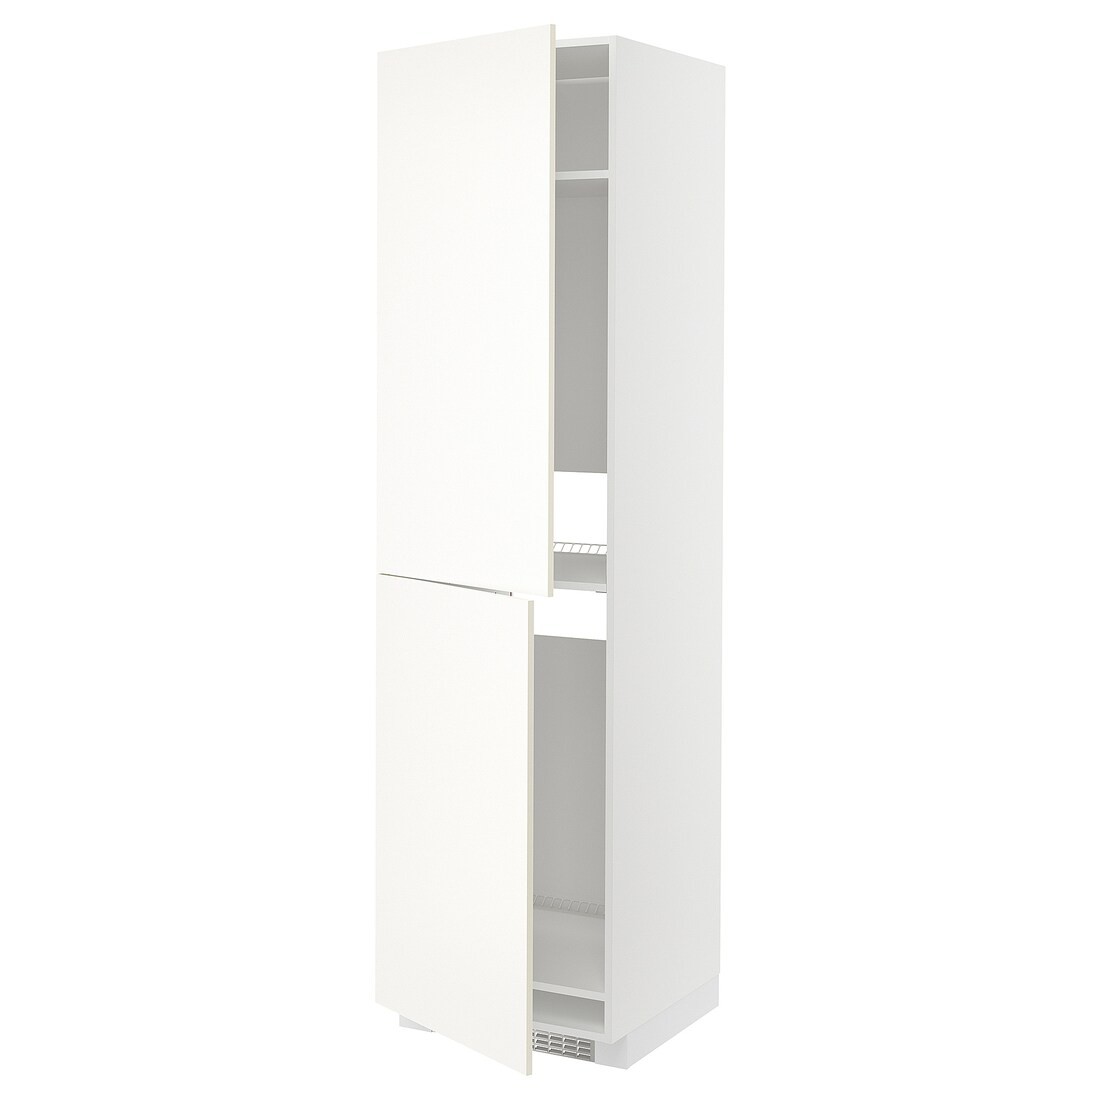 IKEA METOD МЕТОД Высокий шкаф для холодильника / морозильника, белый / Vallstena белый 09507354 095.073.54